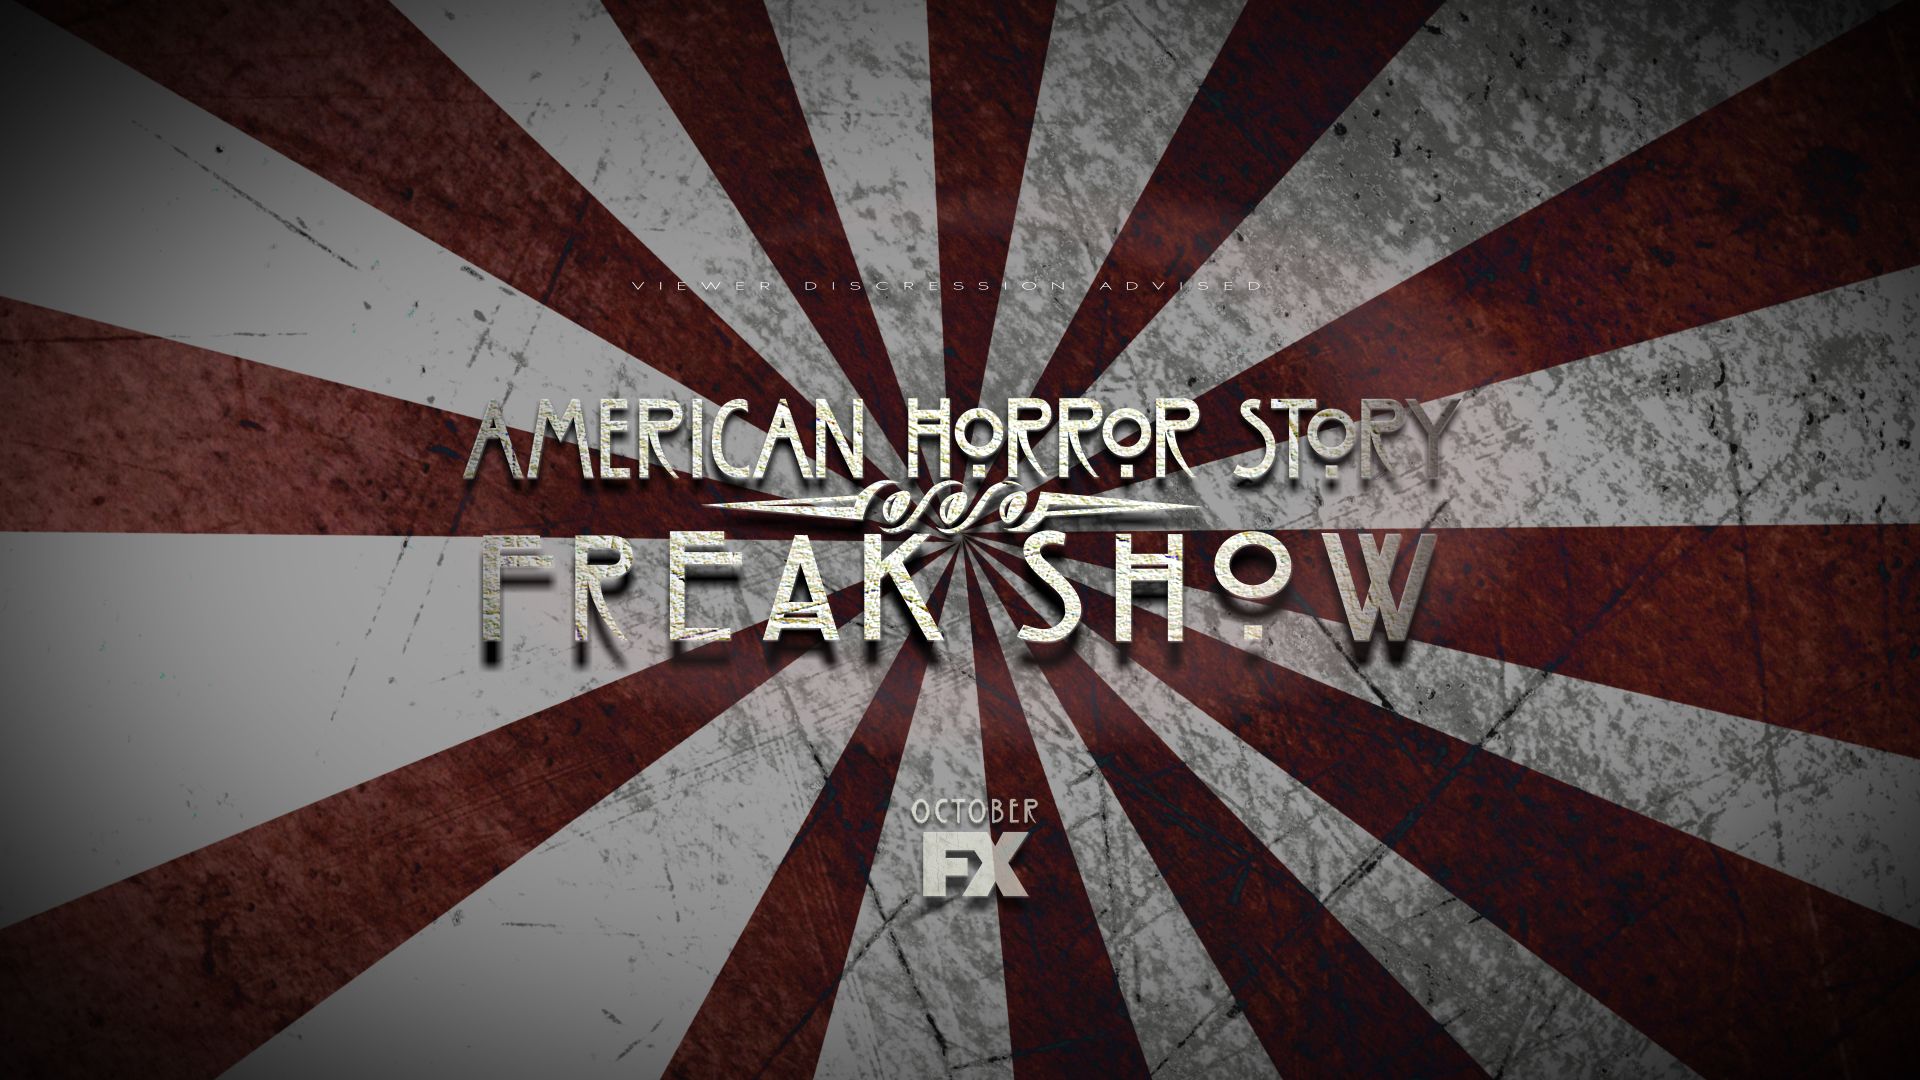 Creepy Carnival Premise Confirmed for ‘American Horror Story’ Season 4